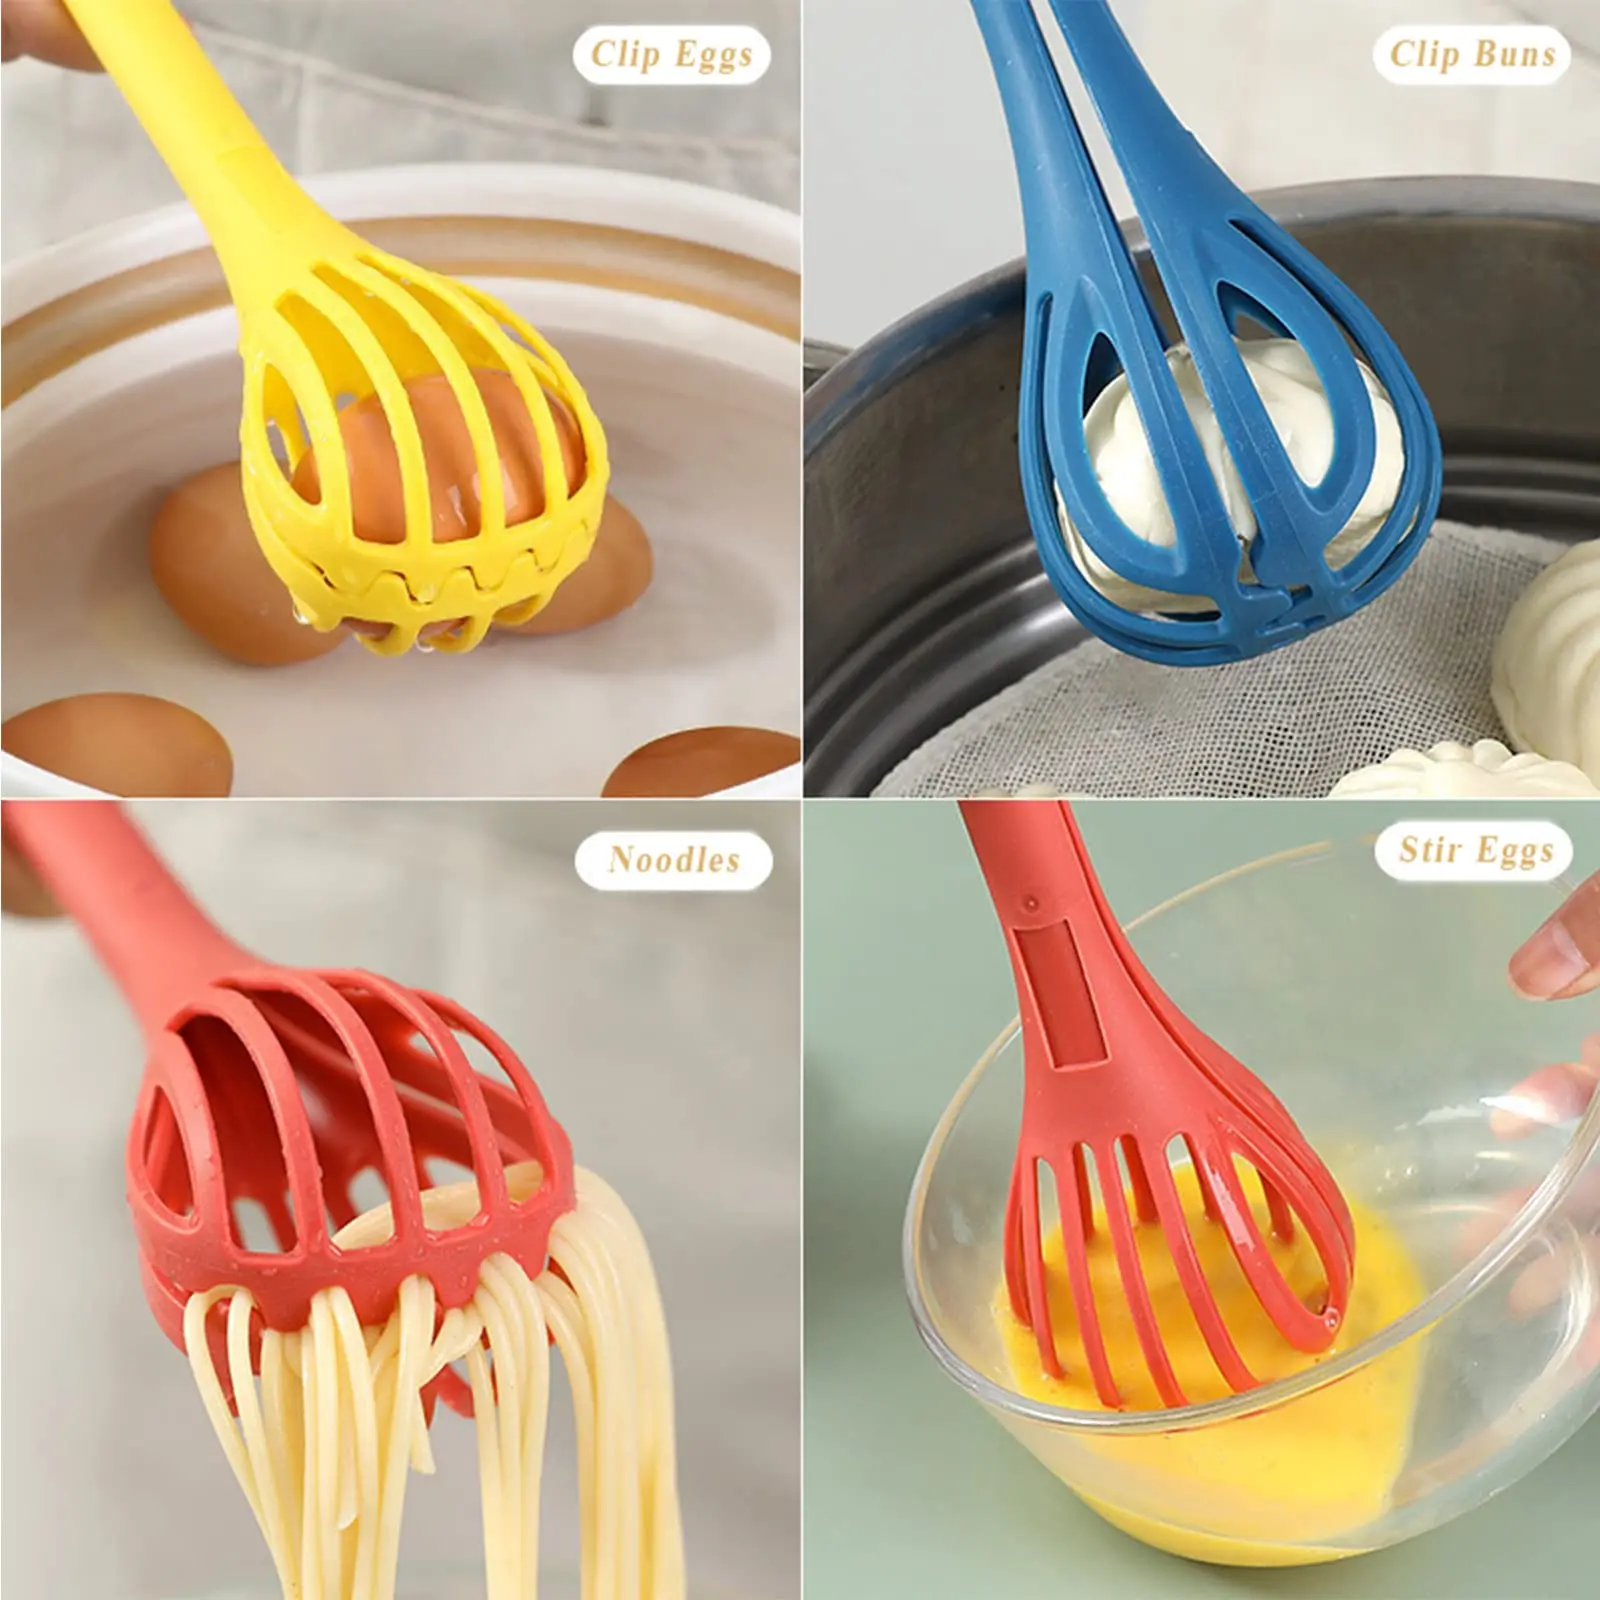 https://ae01.alicdn.com/kf/S5382edc16de14355875ecaa1a2e74f4cE/Multifunctional-Egg-Beater-Egg-Milk-Whisk-Kitchen-Whisk-Food-Clips-Mixer-Manual-Stirrer-Noodles-Pasta-Tongs.jpg